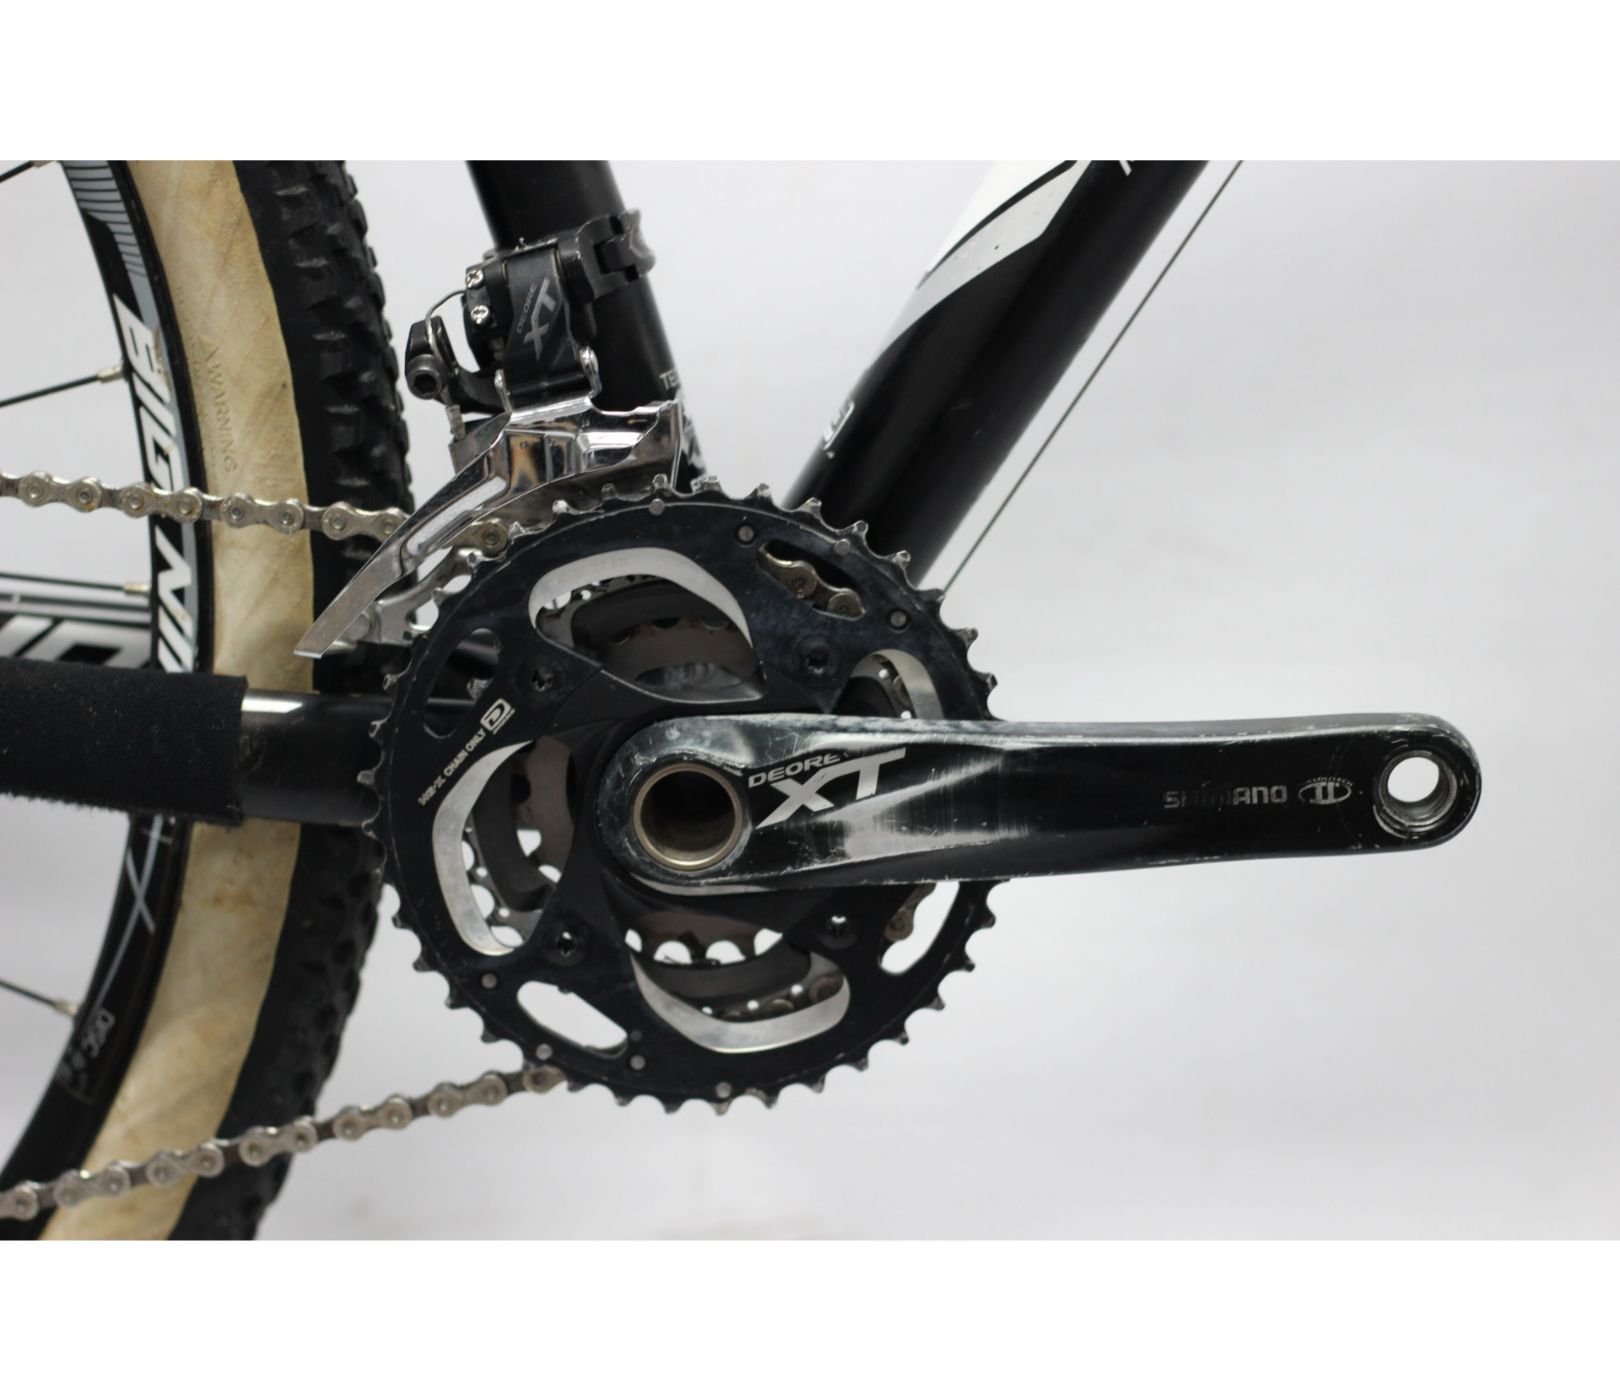 Pre-Owned Merida Big Nine XT Edition Aluminium Hardtail Mountain Bike - L